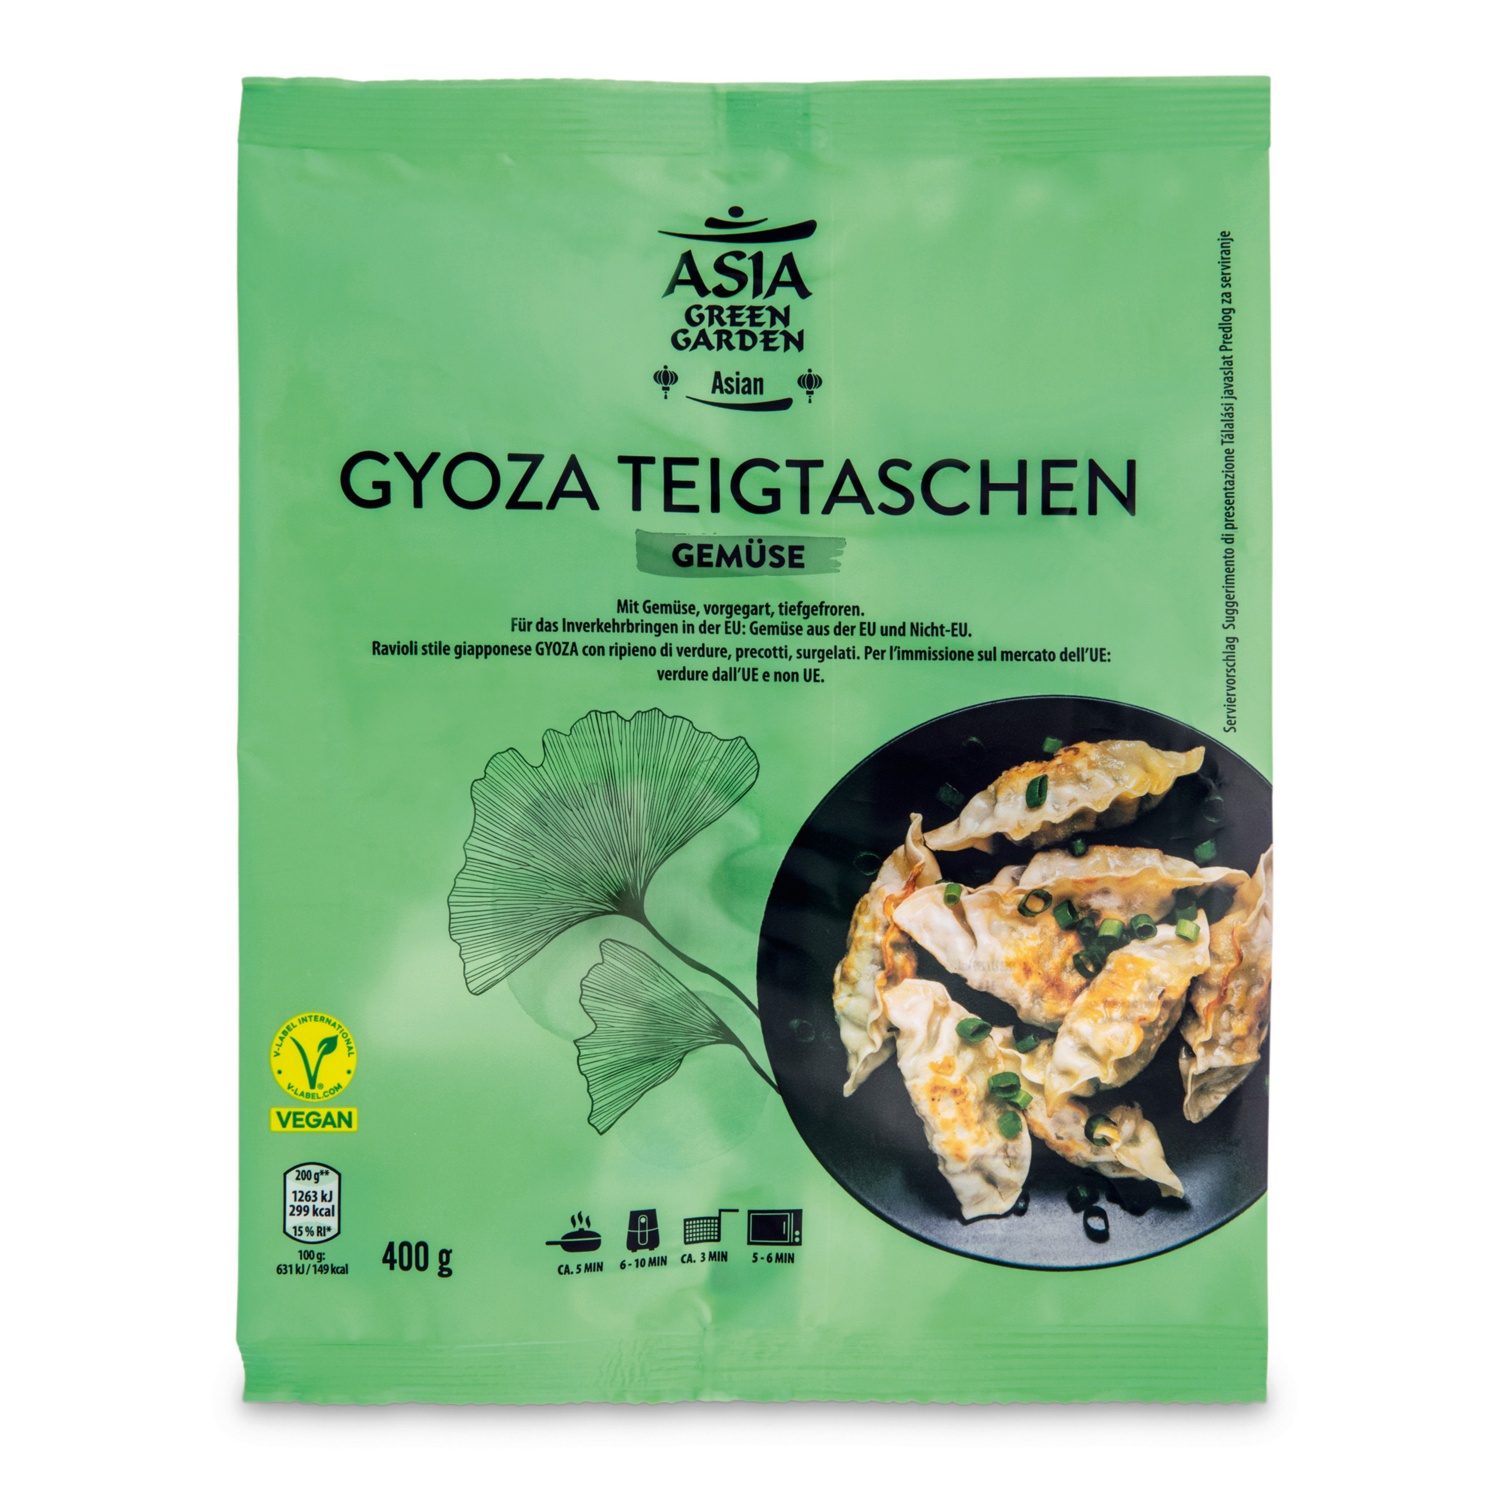 ASIA GREEN GARDEN Gyoza ravioli alle verdure